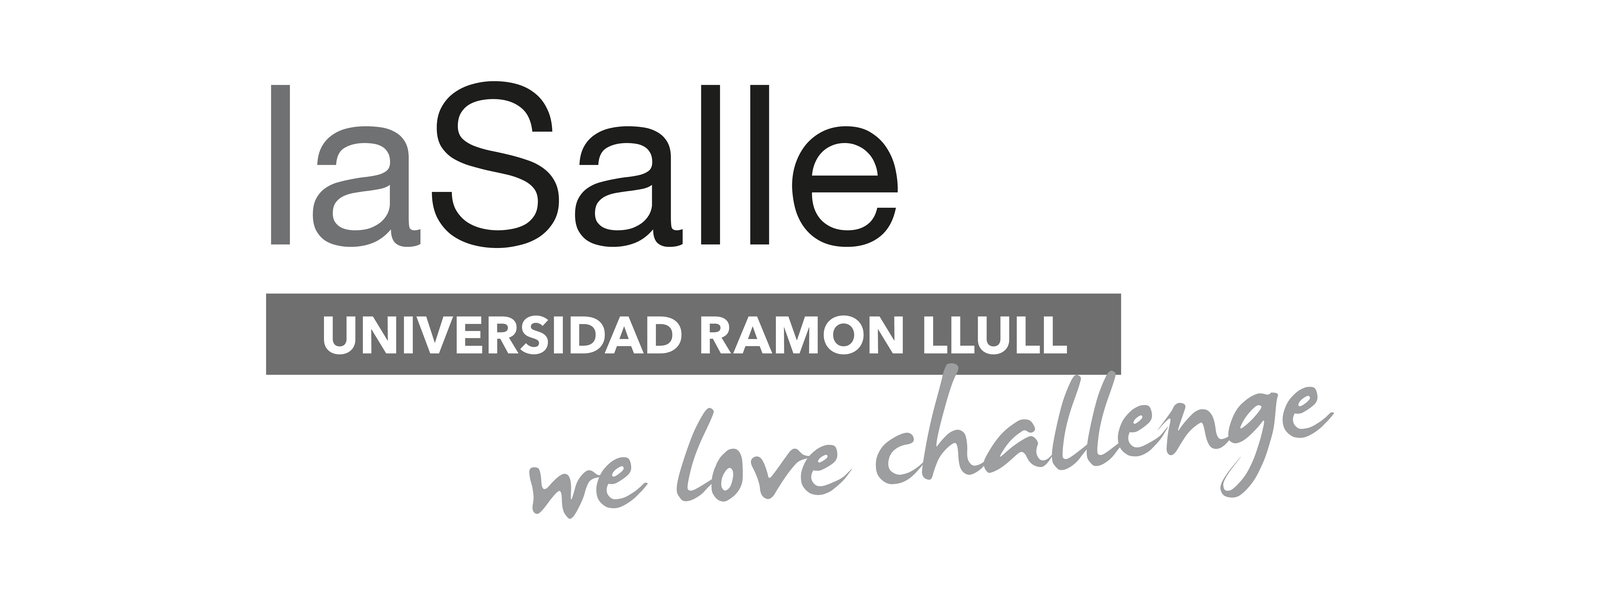 logo_lasalle.jpg